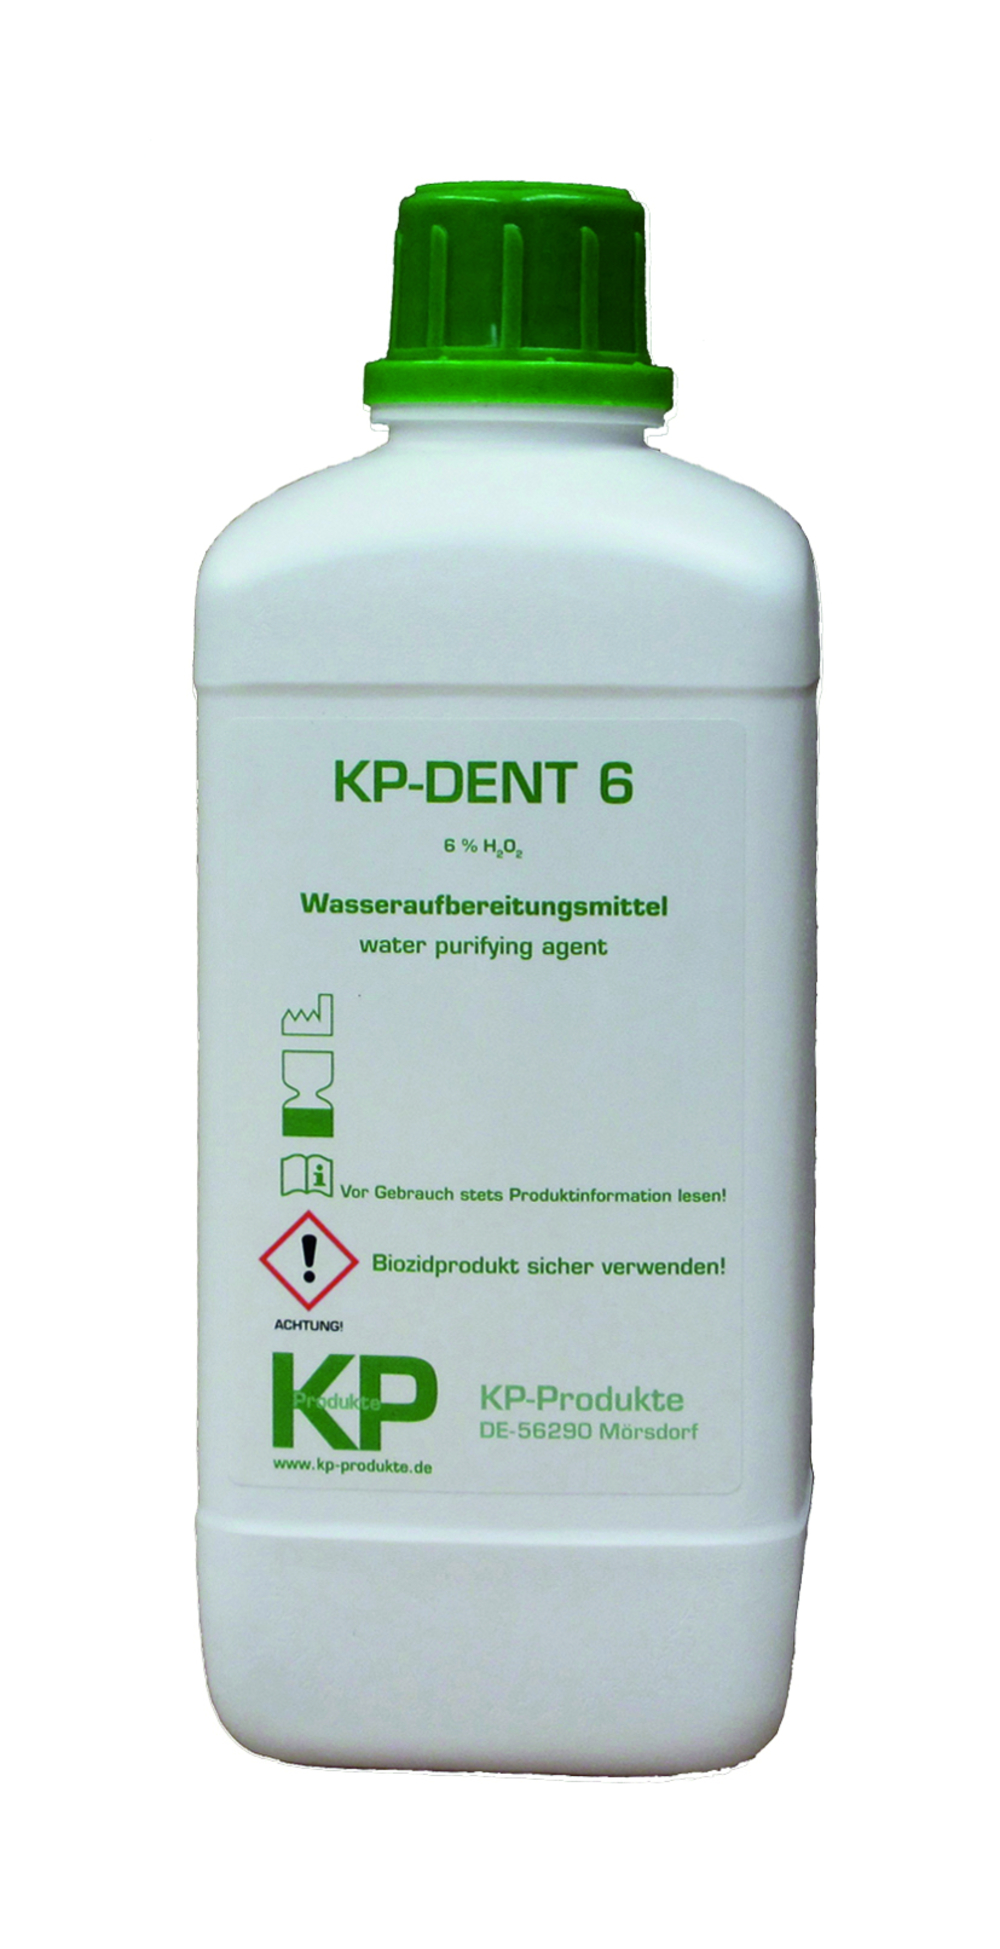 KP-DENT 6